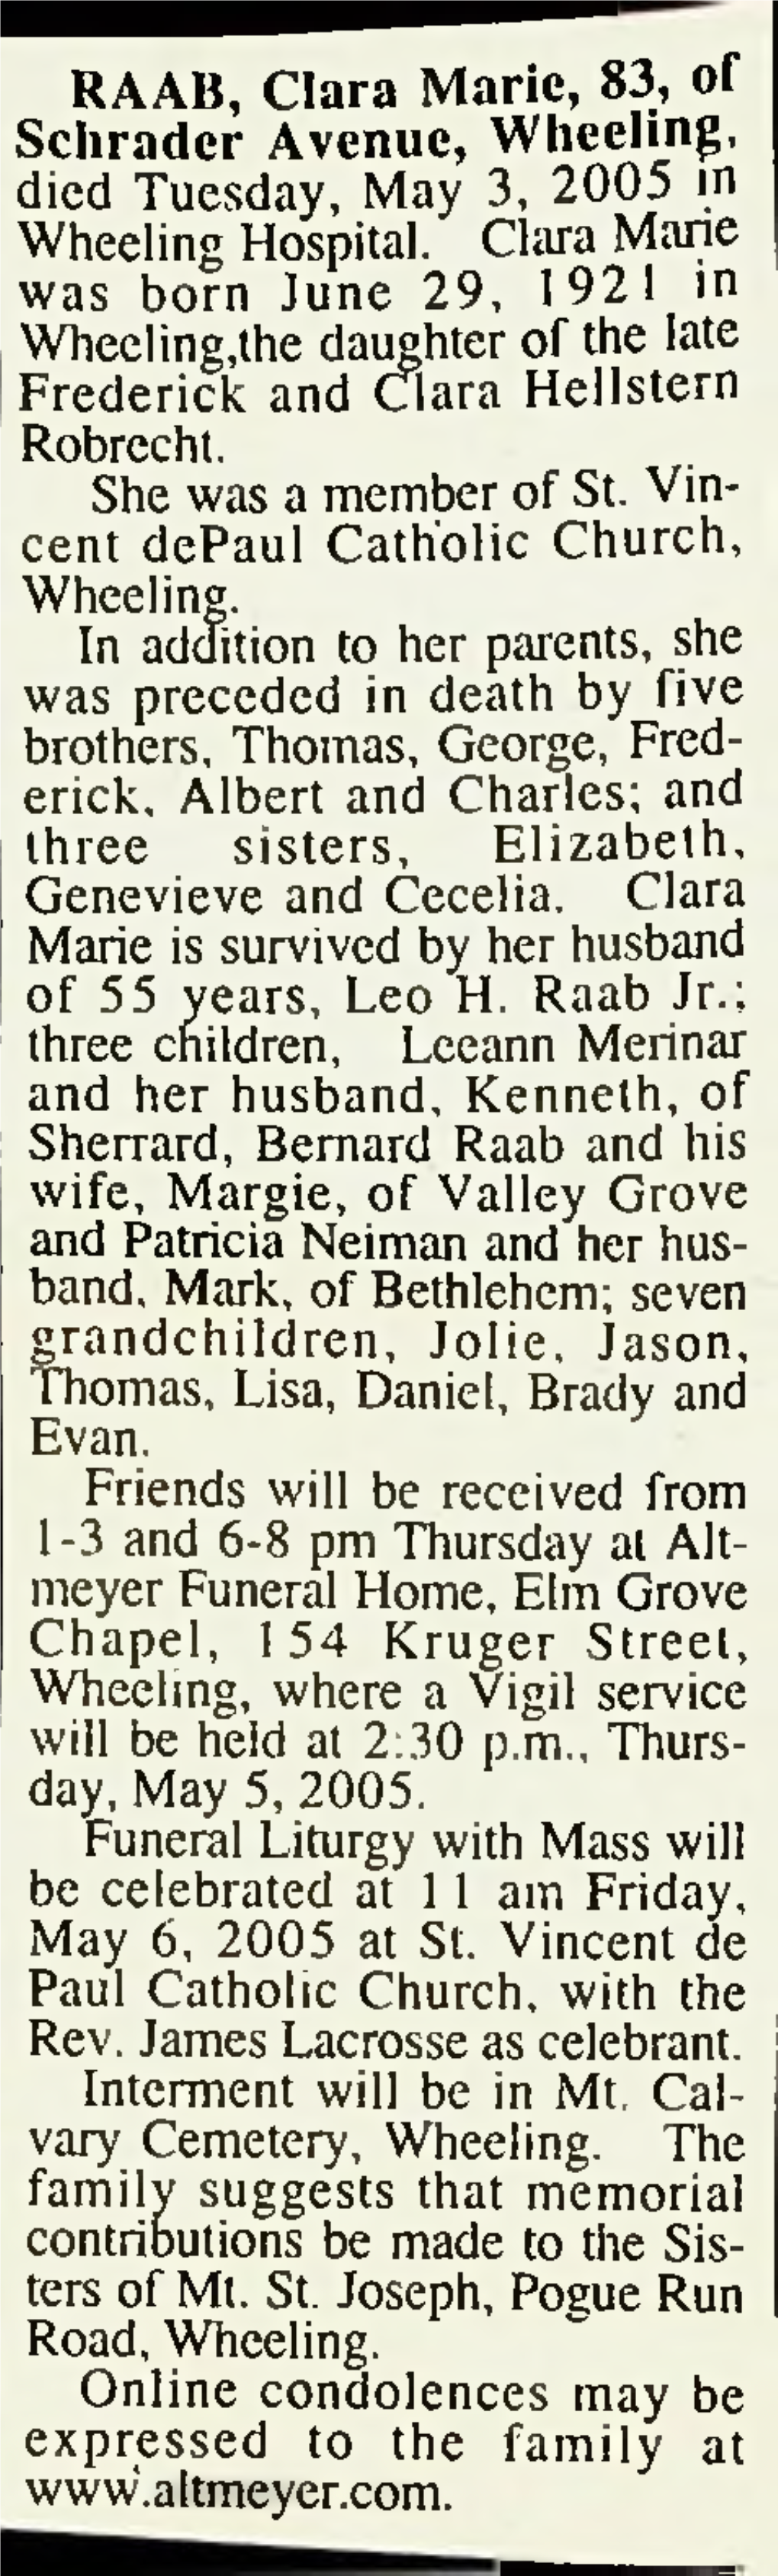 RAAB, Clara Marie, 83, of Schrader Avenue, Wheeling, Died Tuesday, May 3, 2005 in Wheeling Hospital